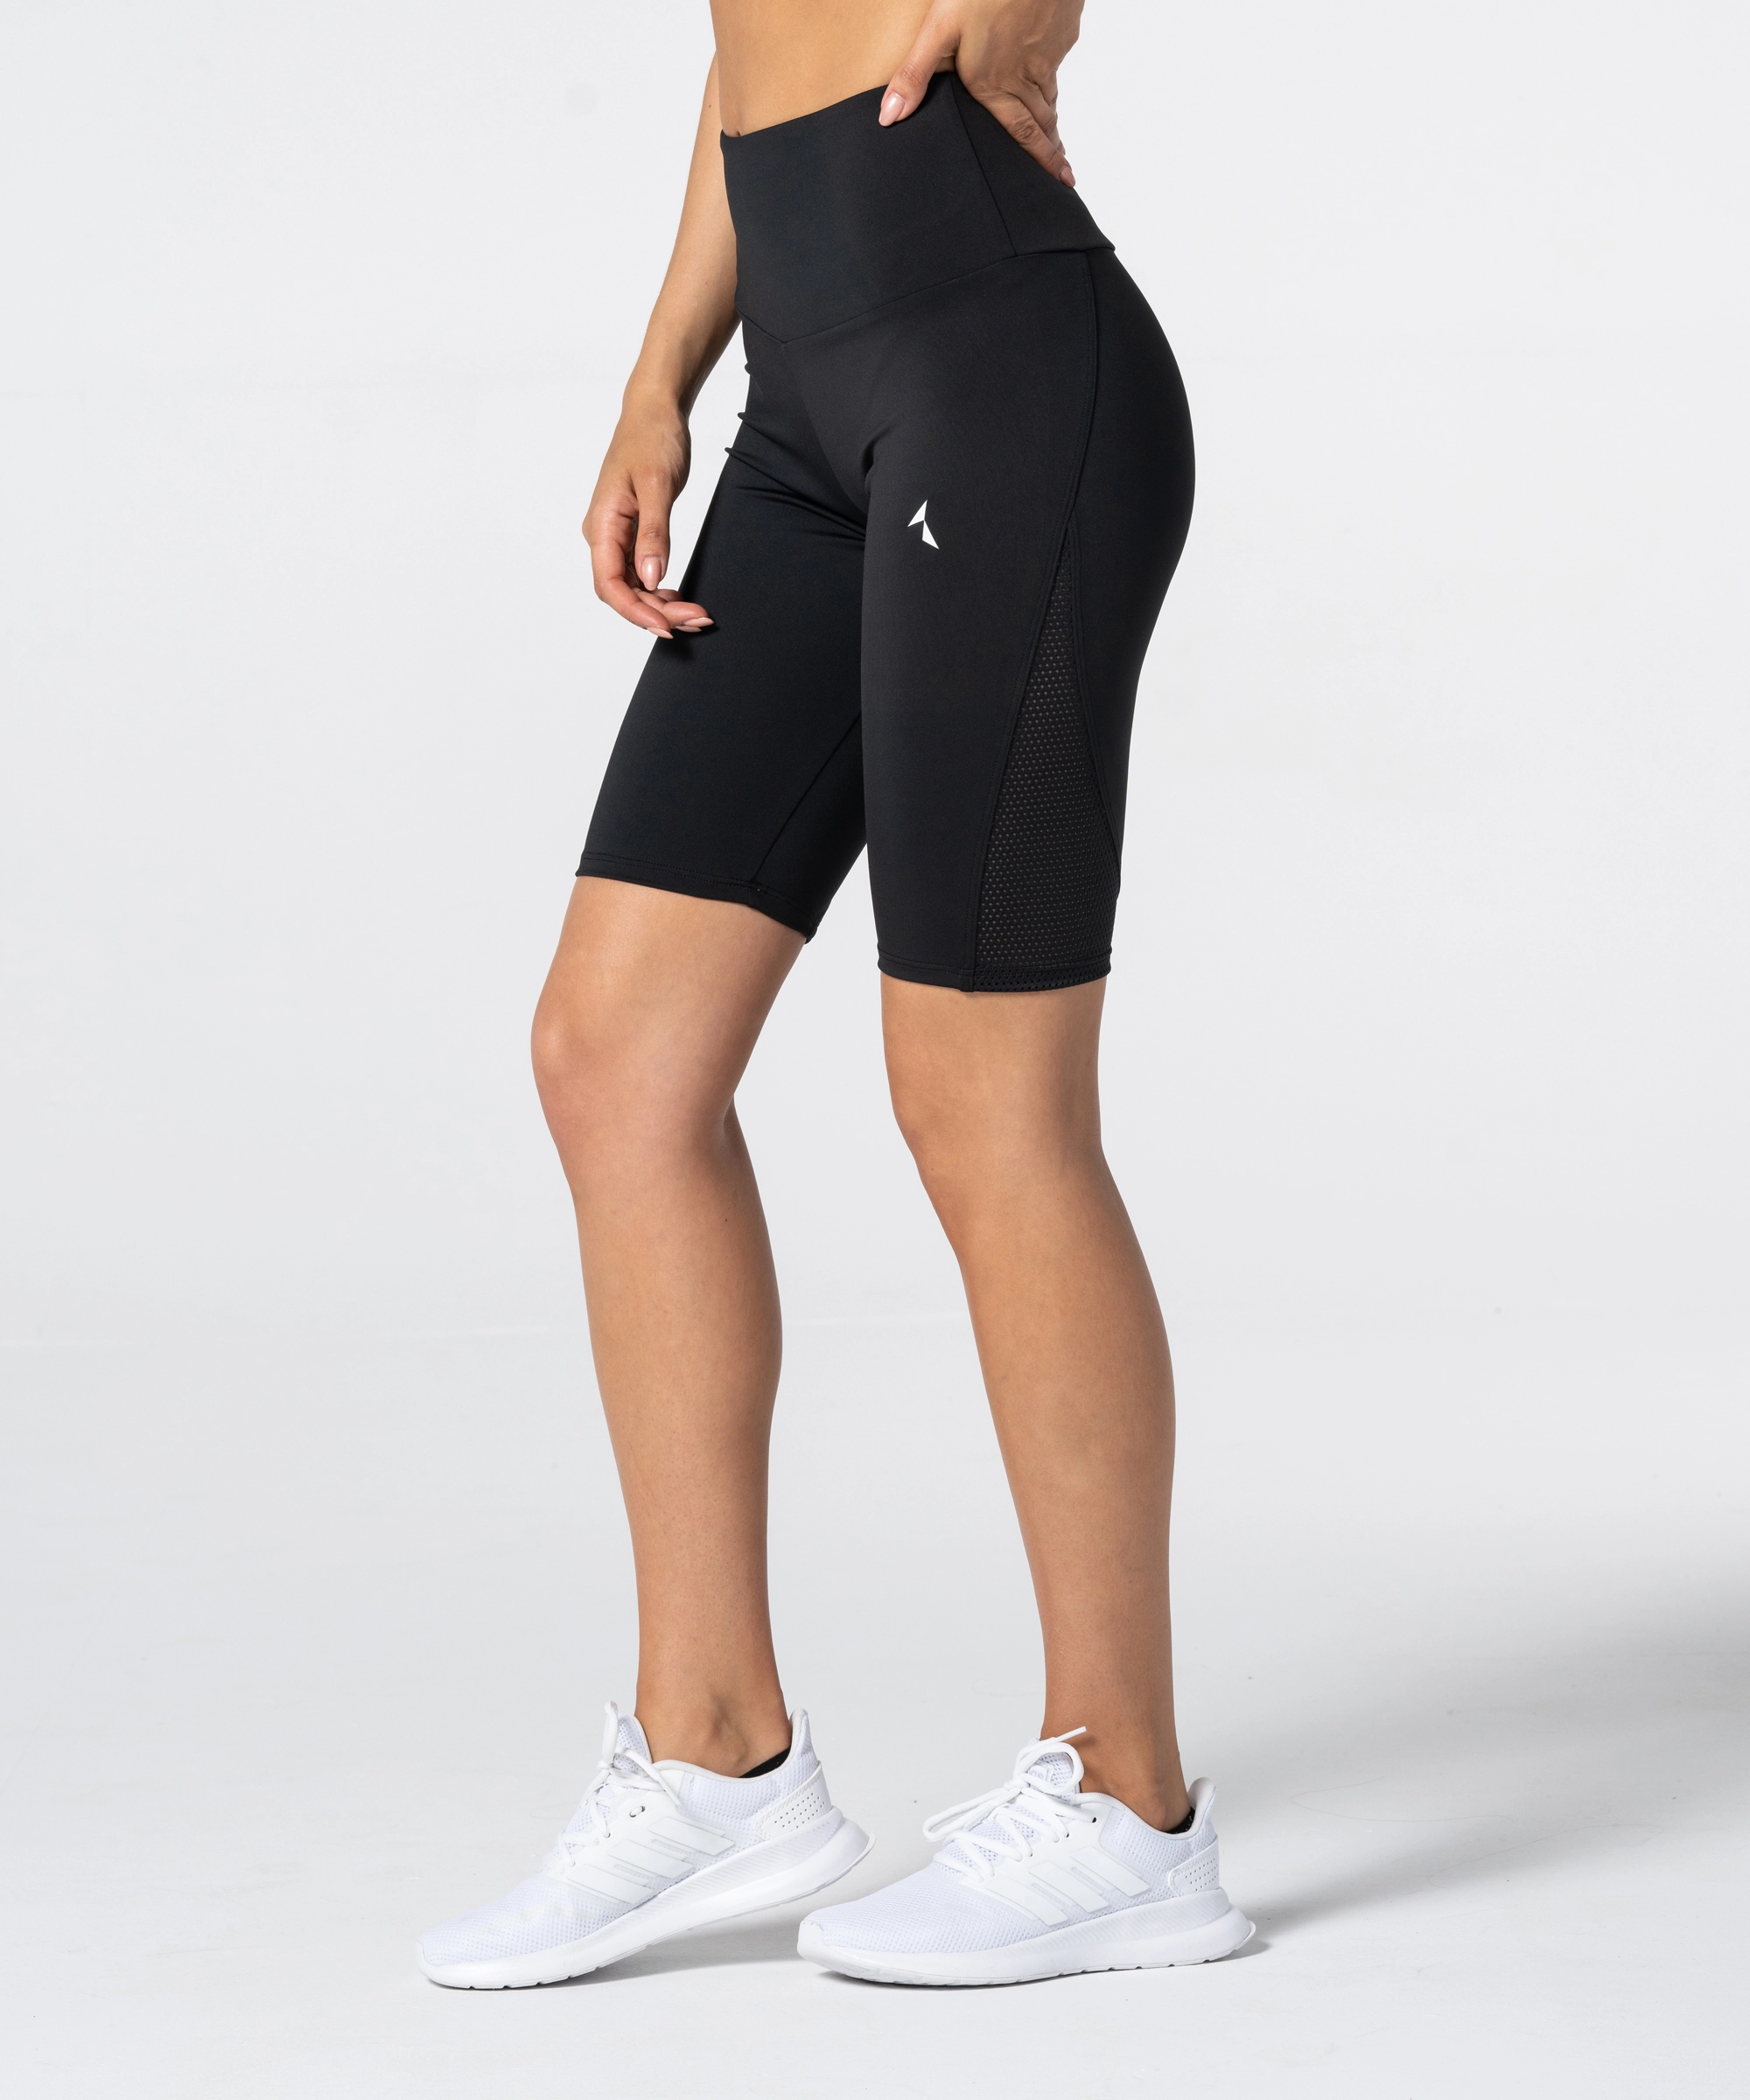 Women's Black Tape Biker Shorts - Carpatree